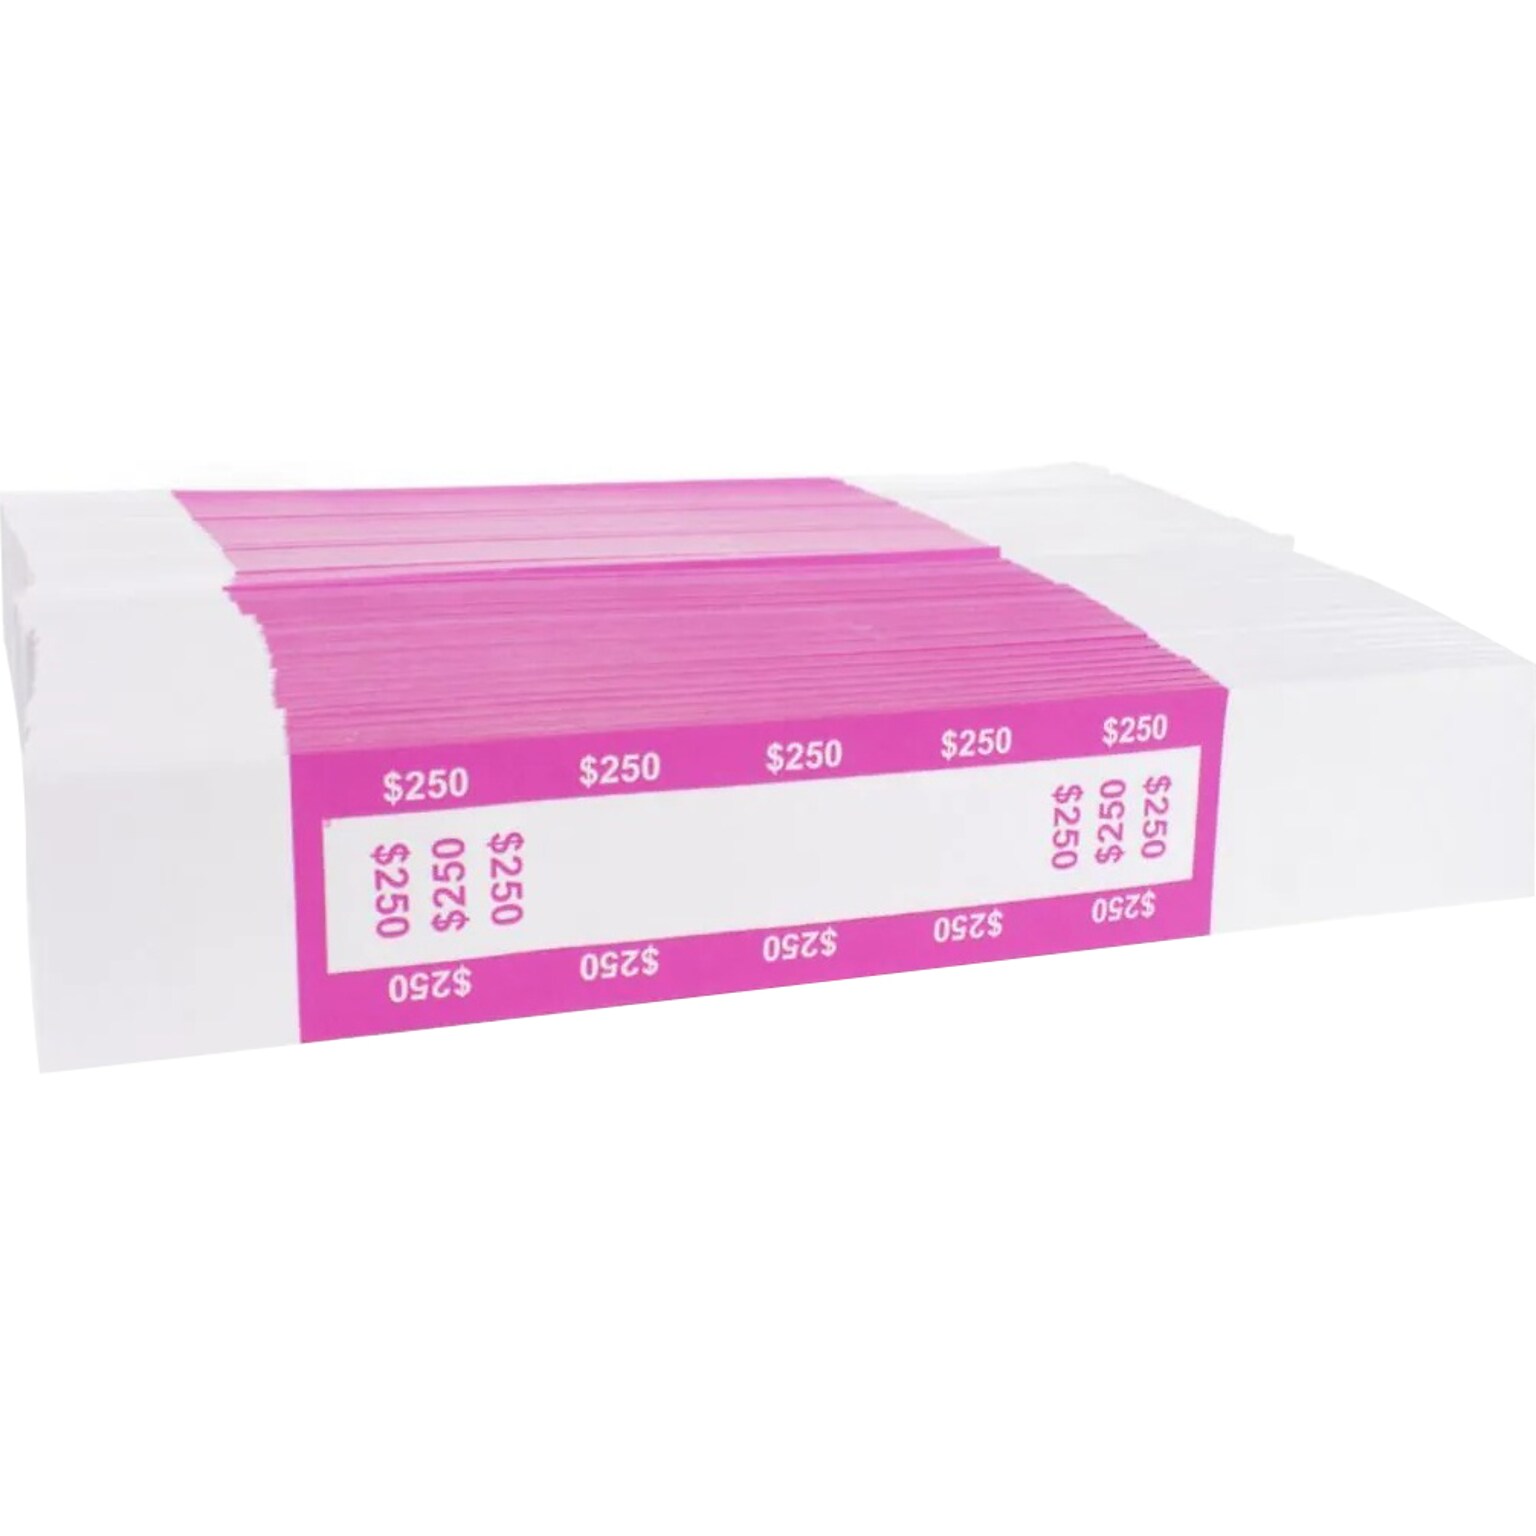 CONTROLTEK Currency Strap, Pink/White, 25000/Carton (560018)